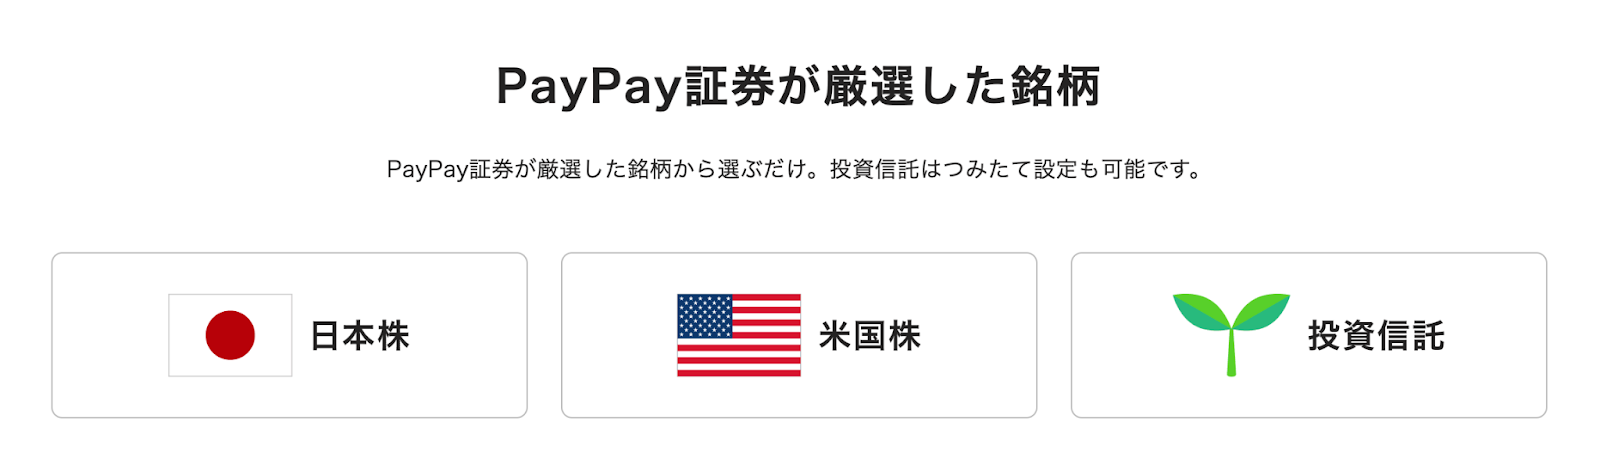 PayPay資産運用